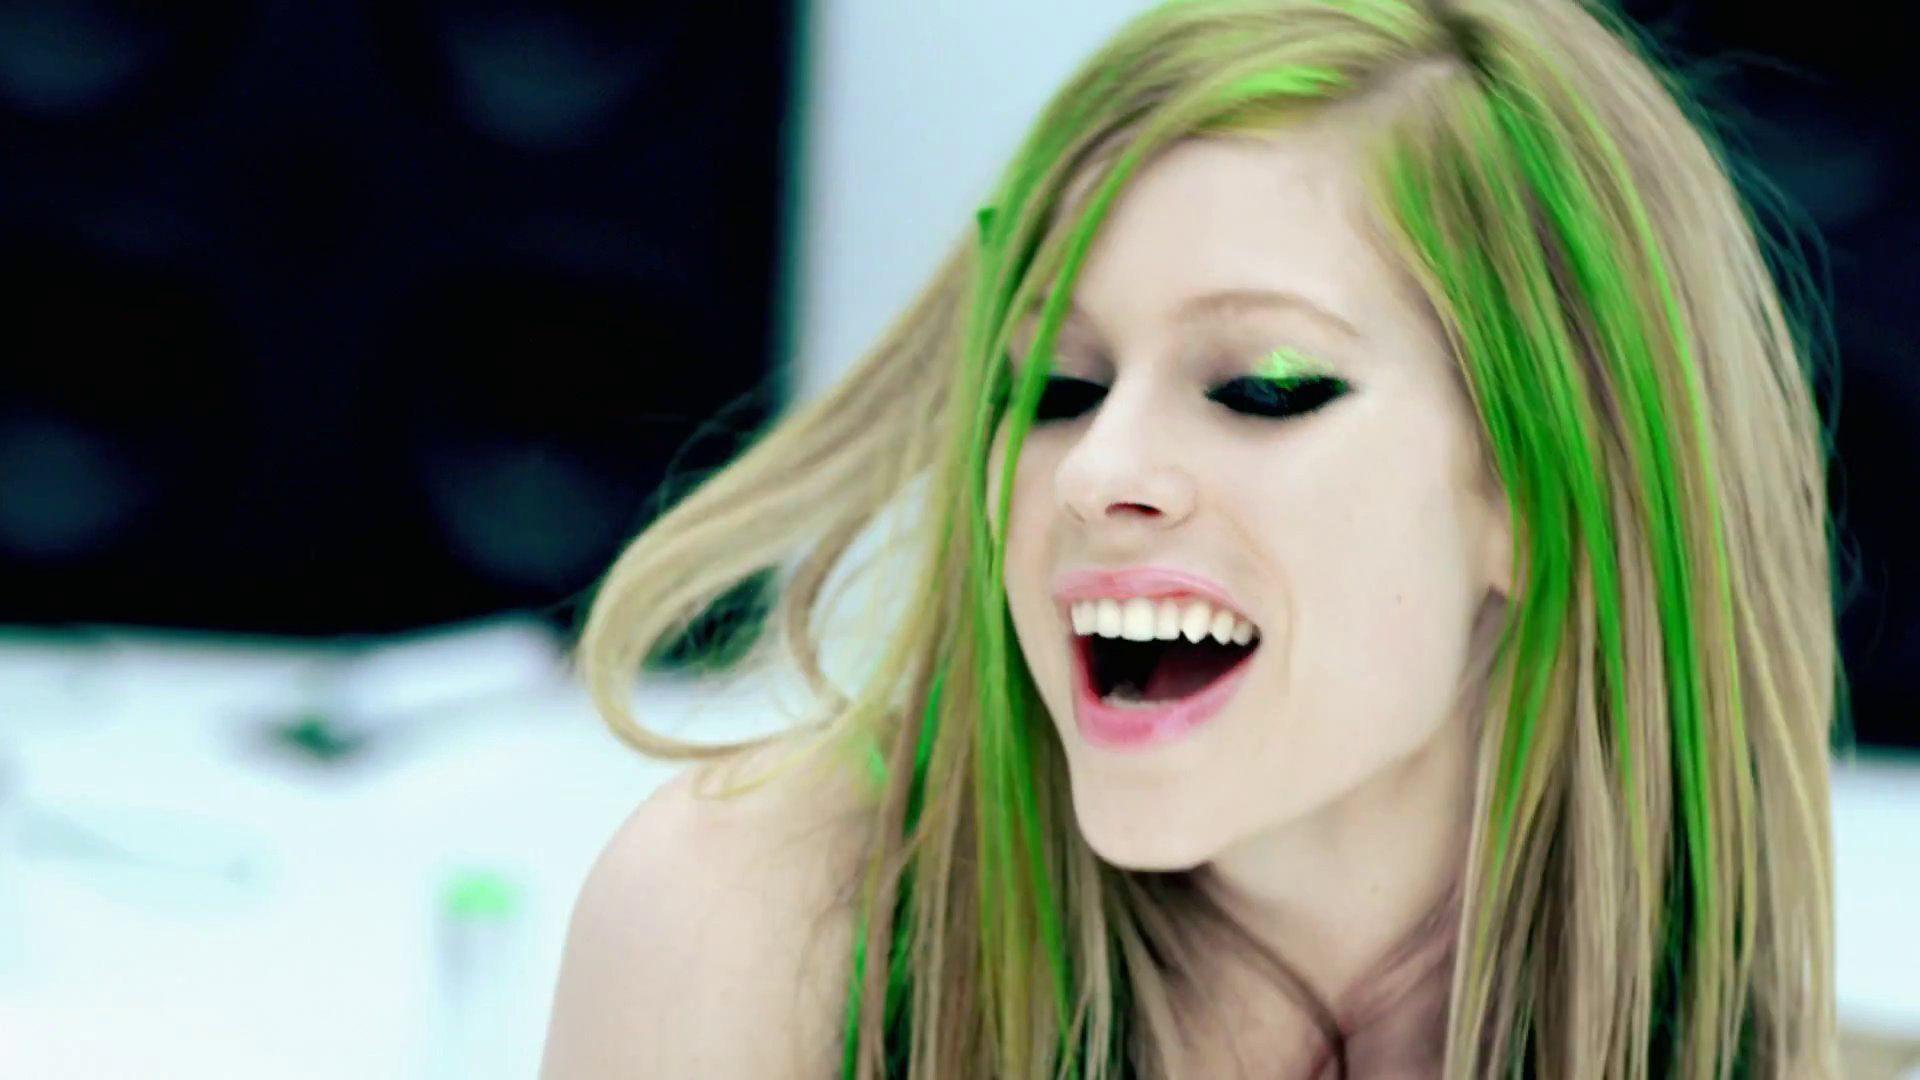 Avril Lavigne image I Smile HD wallpaper and background photo